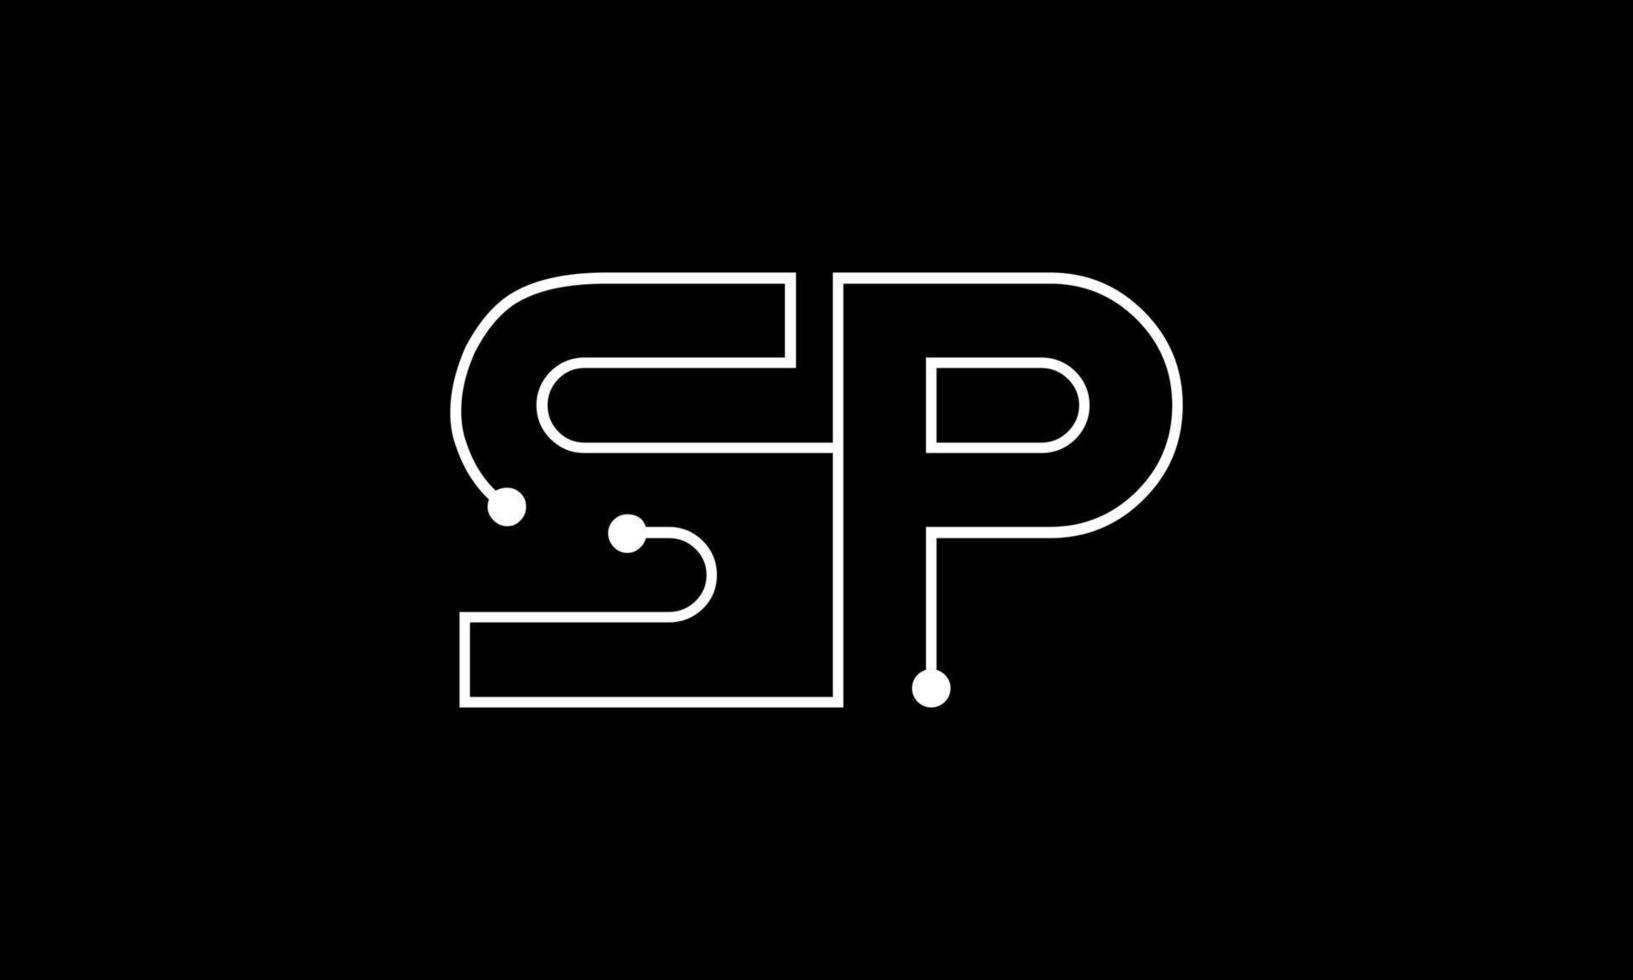 sp logo design. iniziale sp lettera logo design monogramma vettore design professionista vettore.